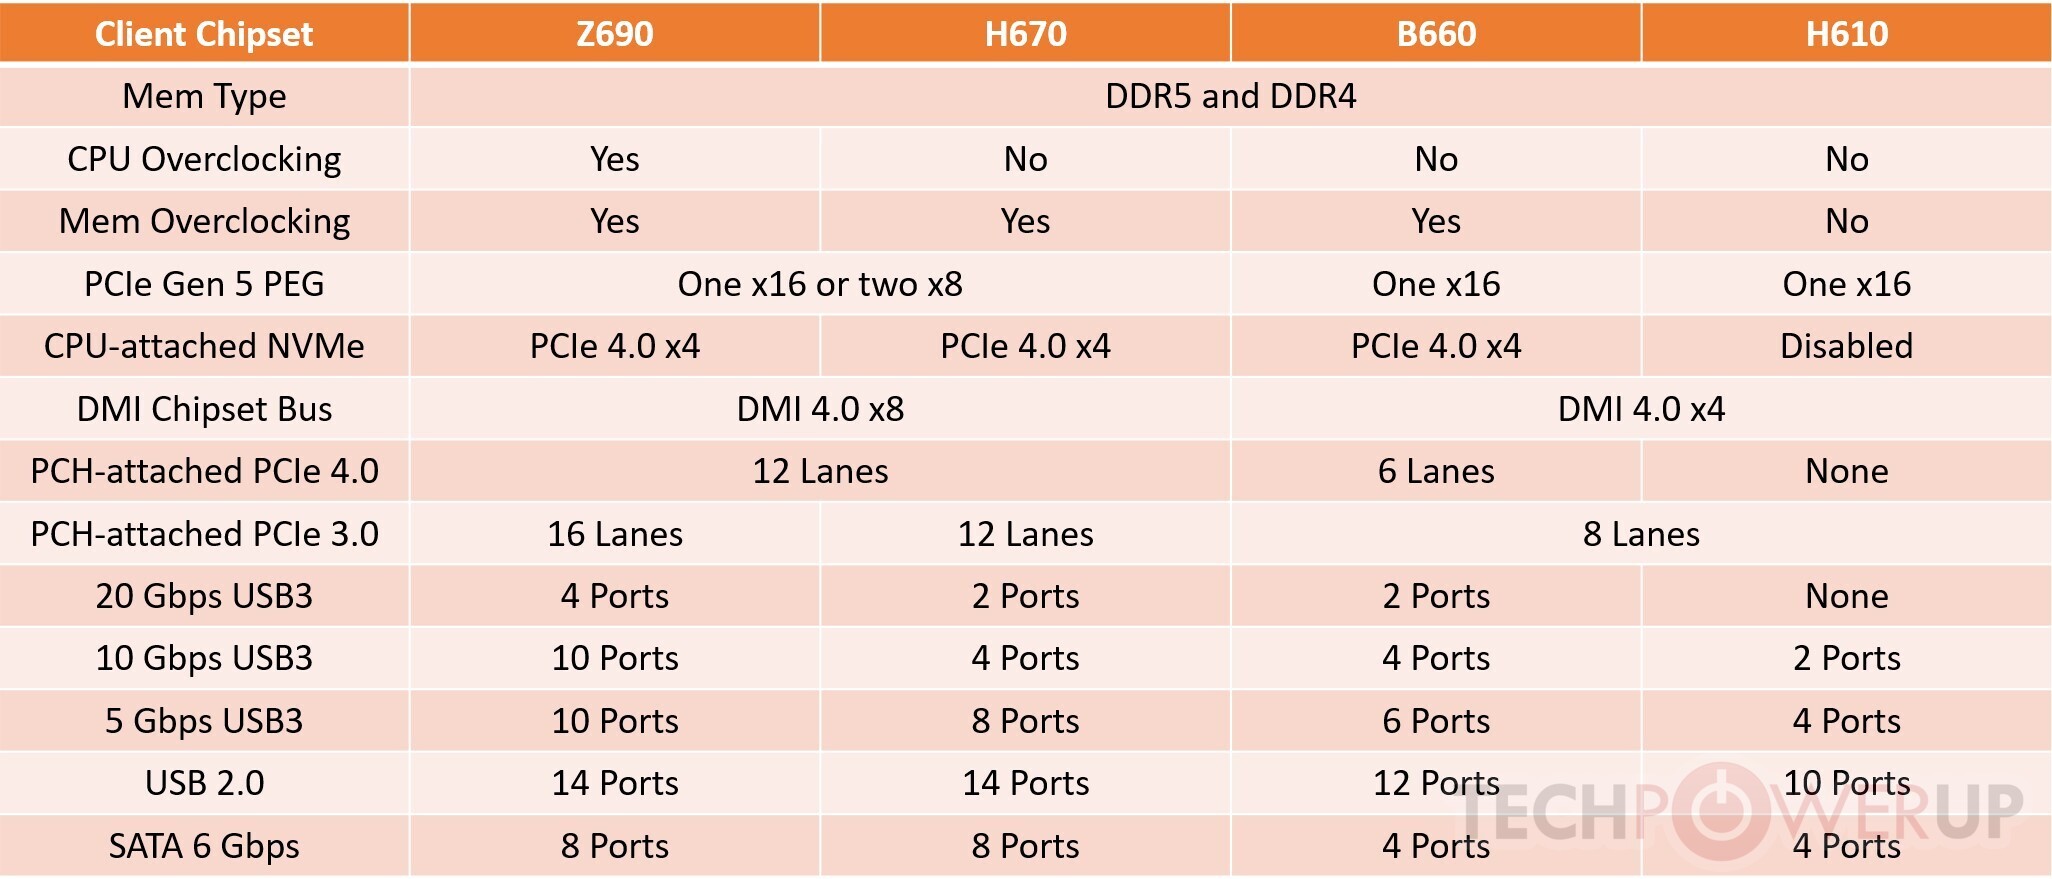 圖 炸G排B660 GAMING X DDR4不支援PCIE5